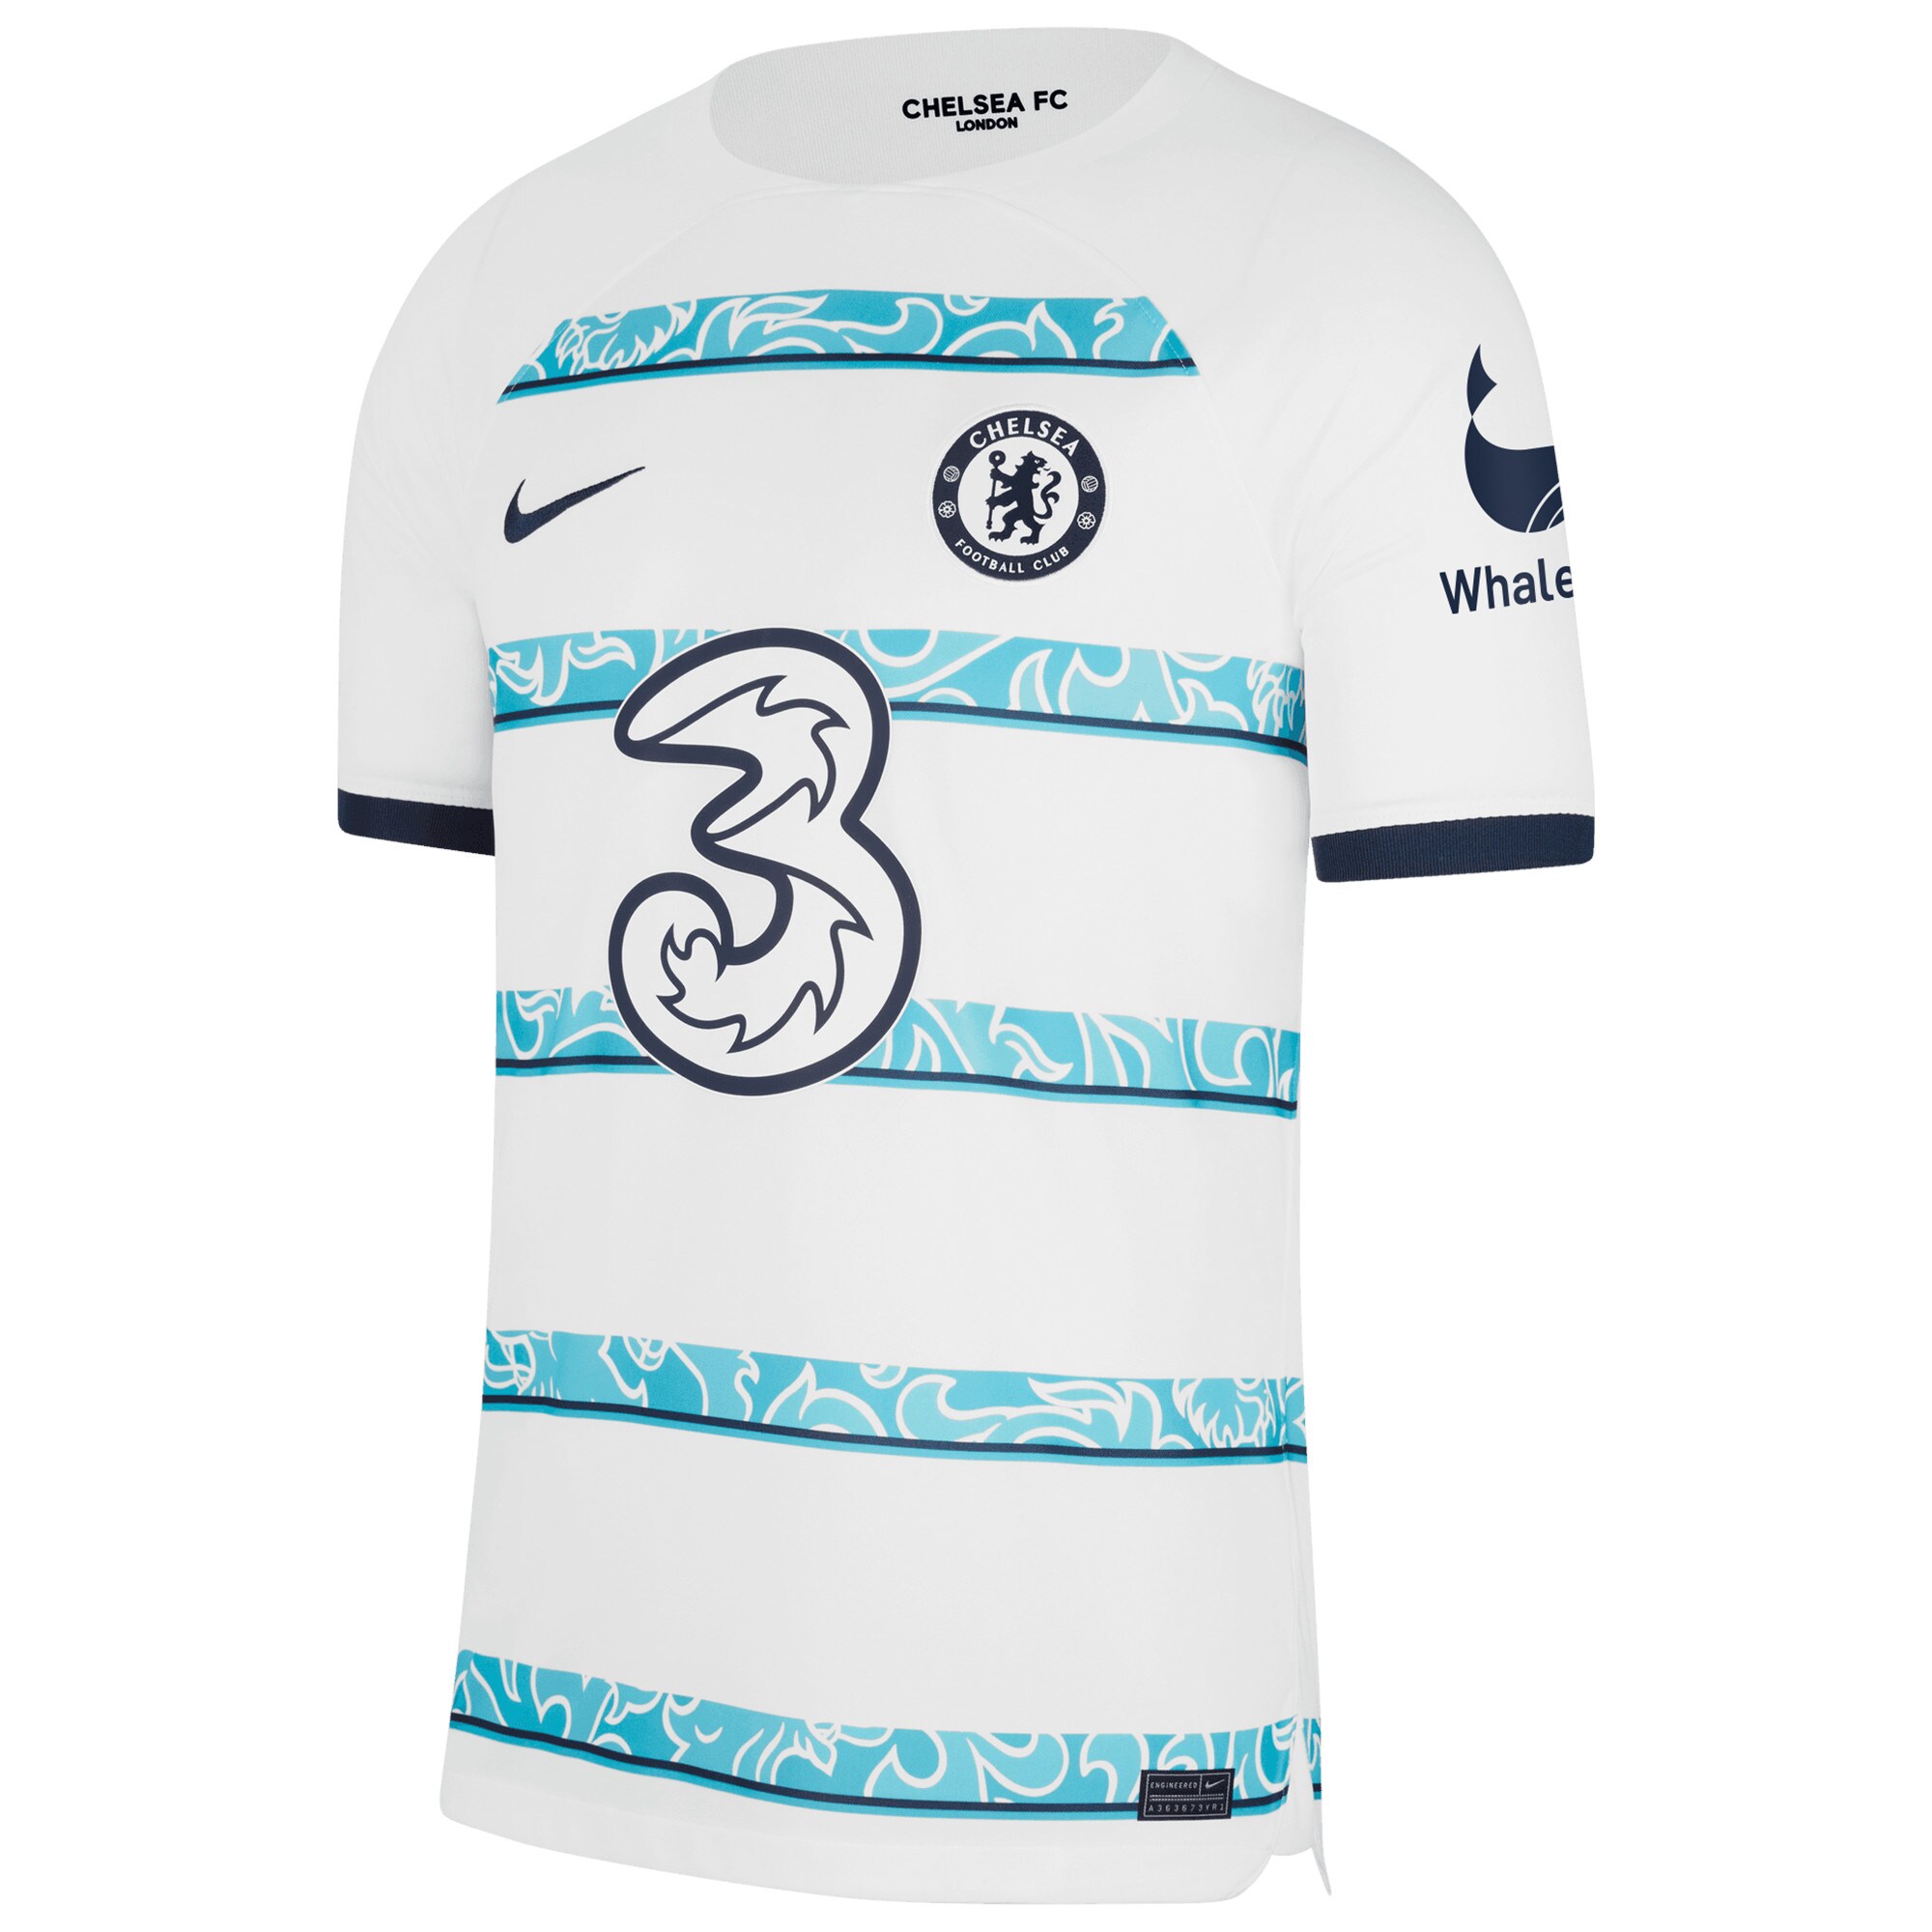 Chelsea WSL Away Stadium Shirt 2022-23 with J.Fleming 17 printing